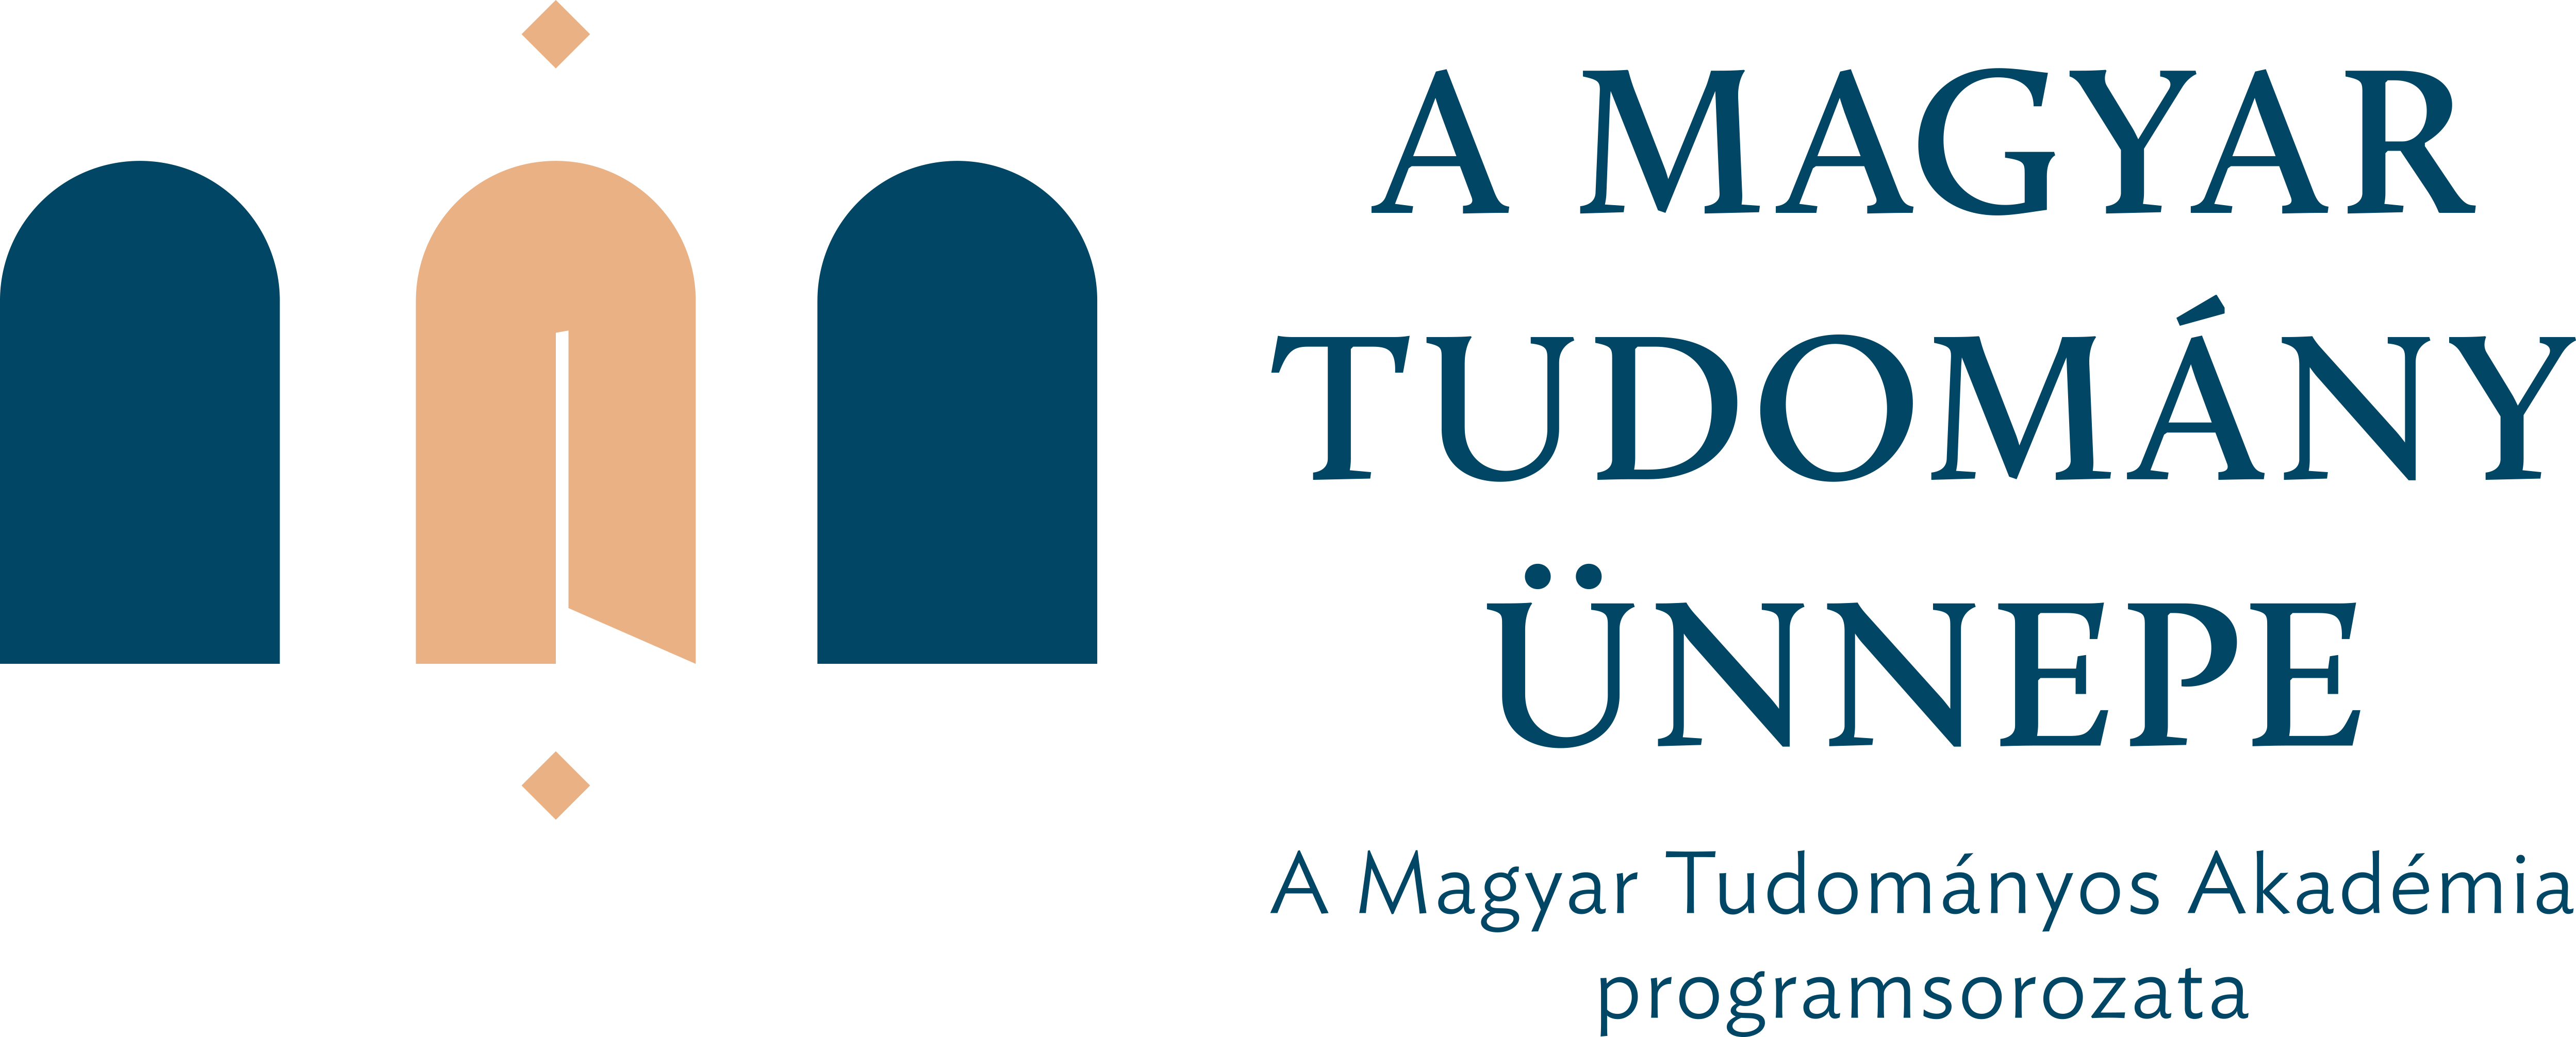 MTU_web_logo-03